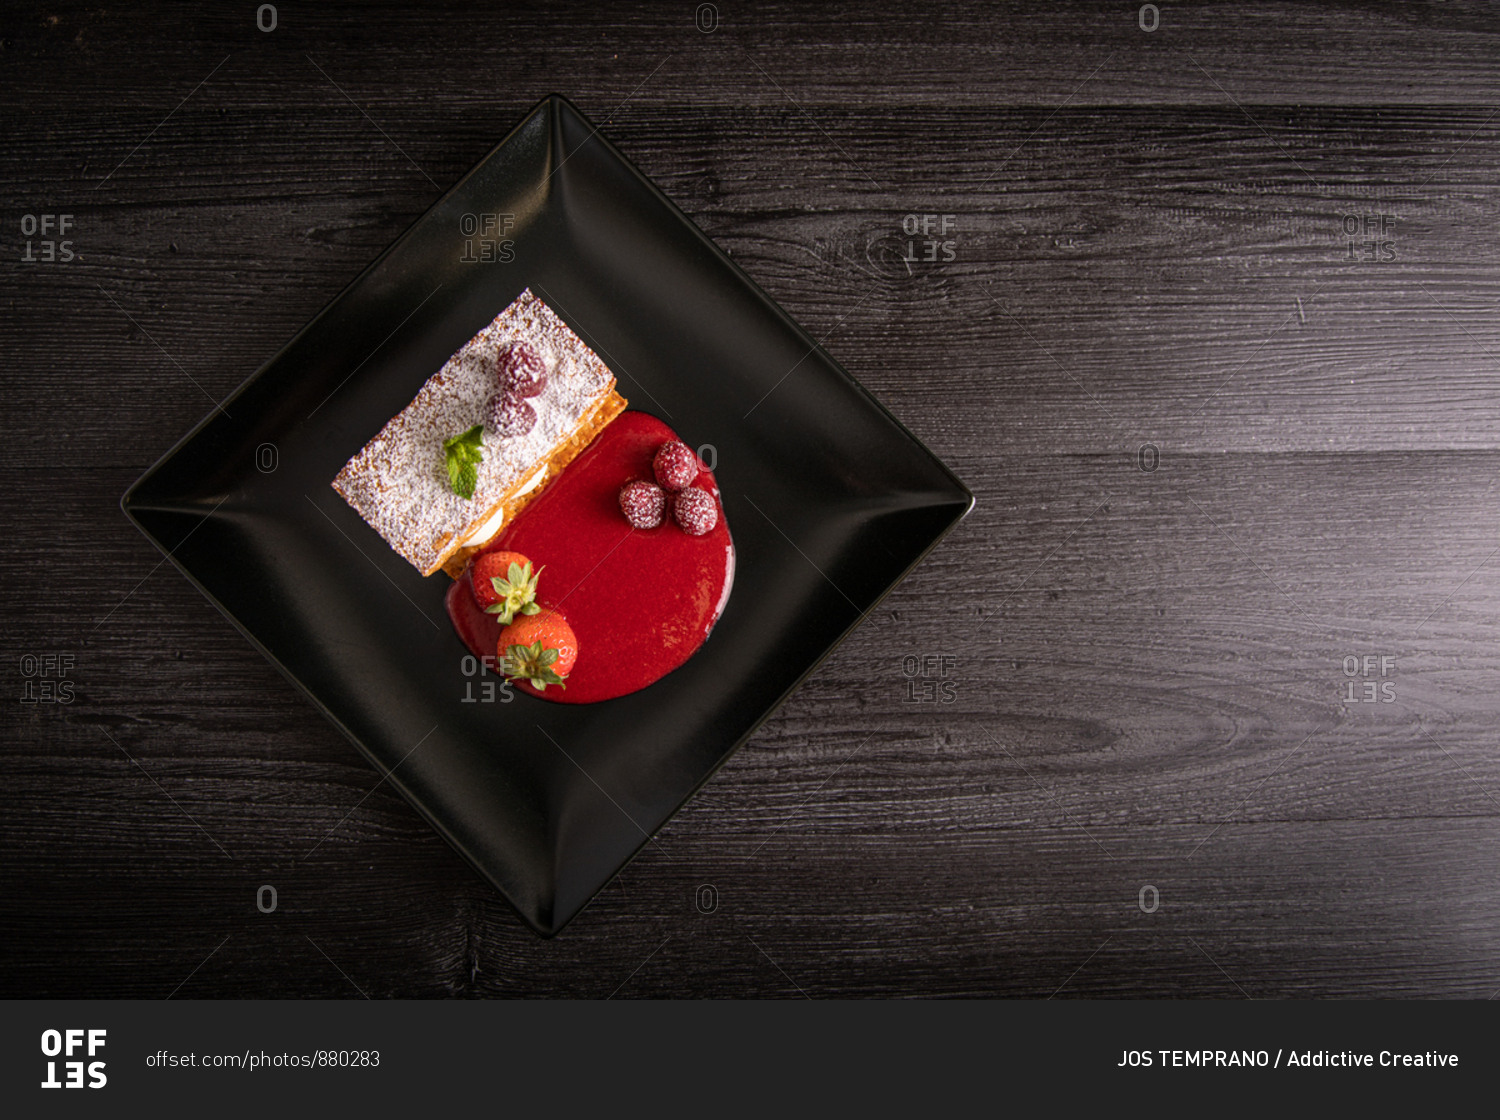 Diplomat cream and red fruit strudel in elegant black plate